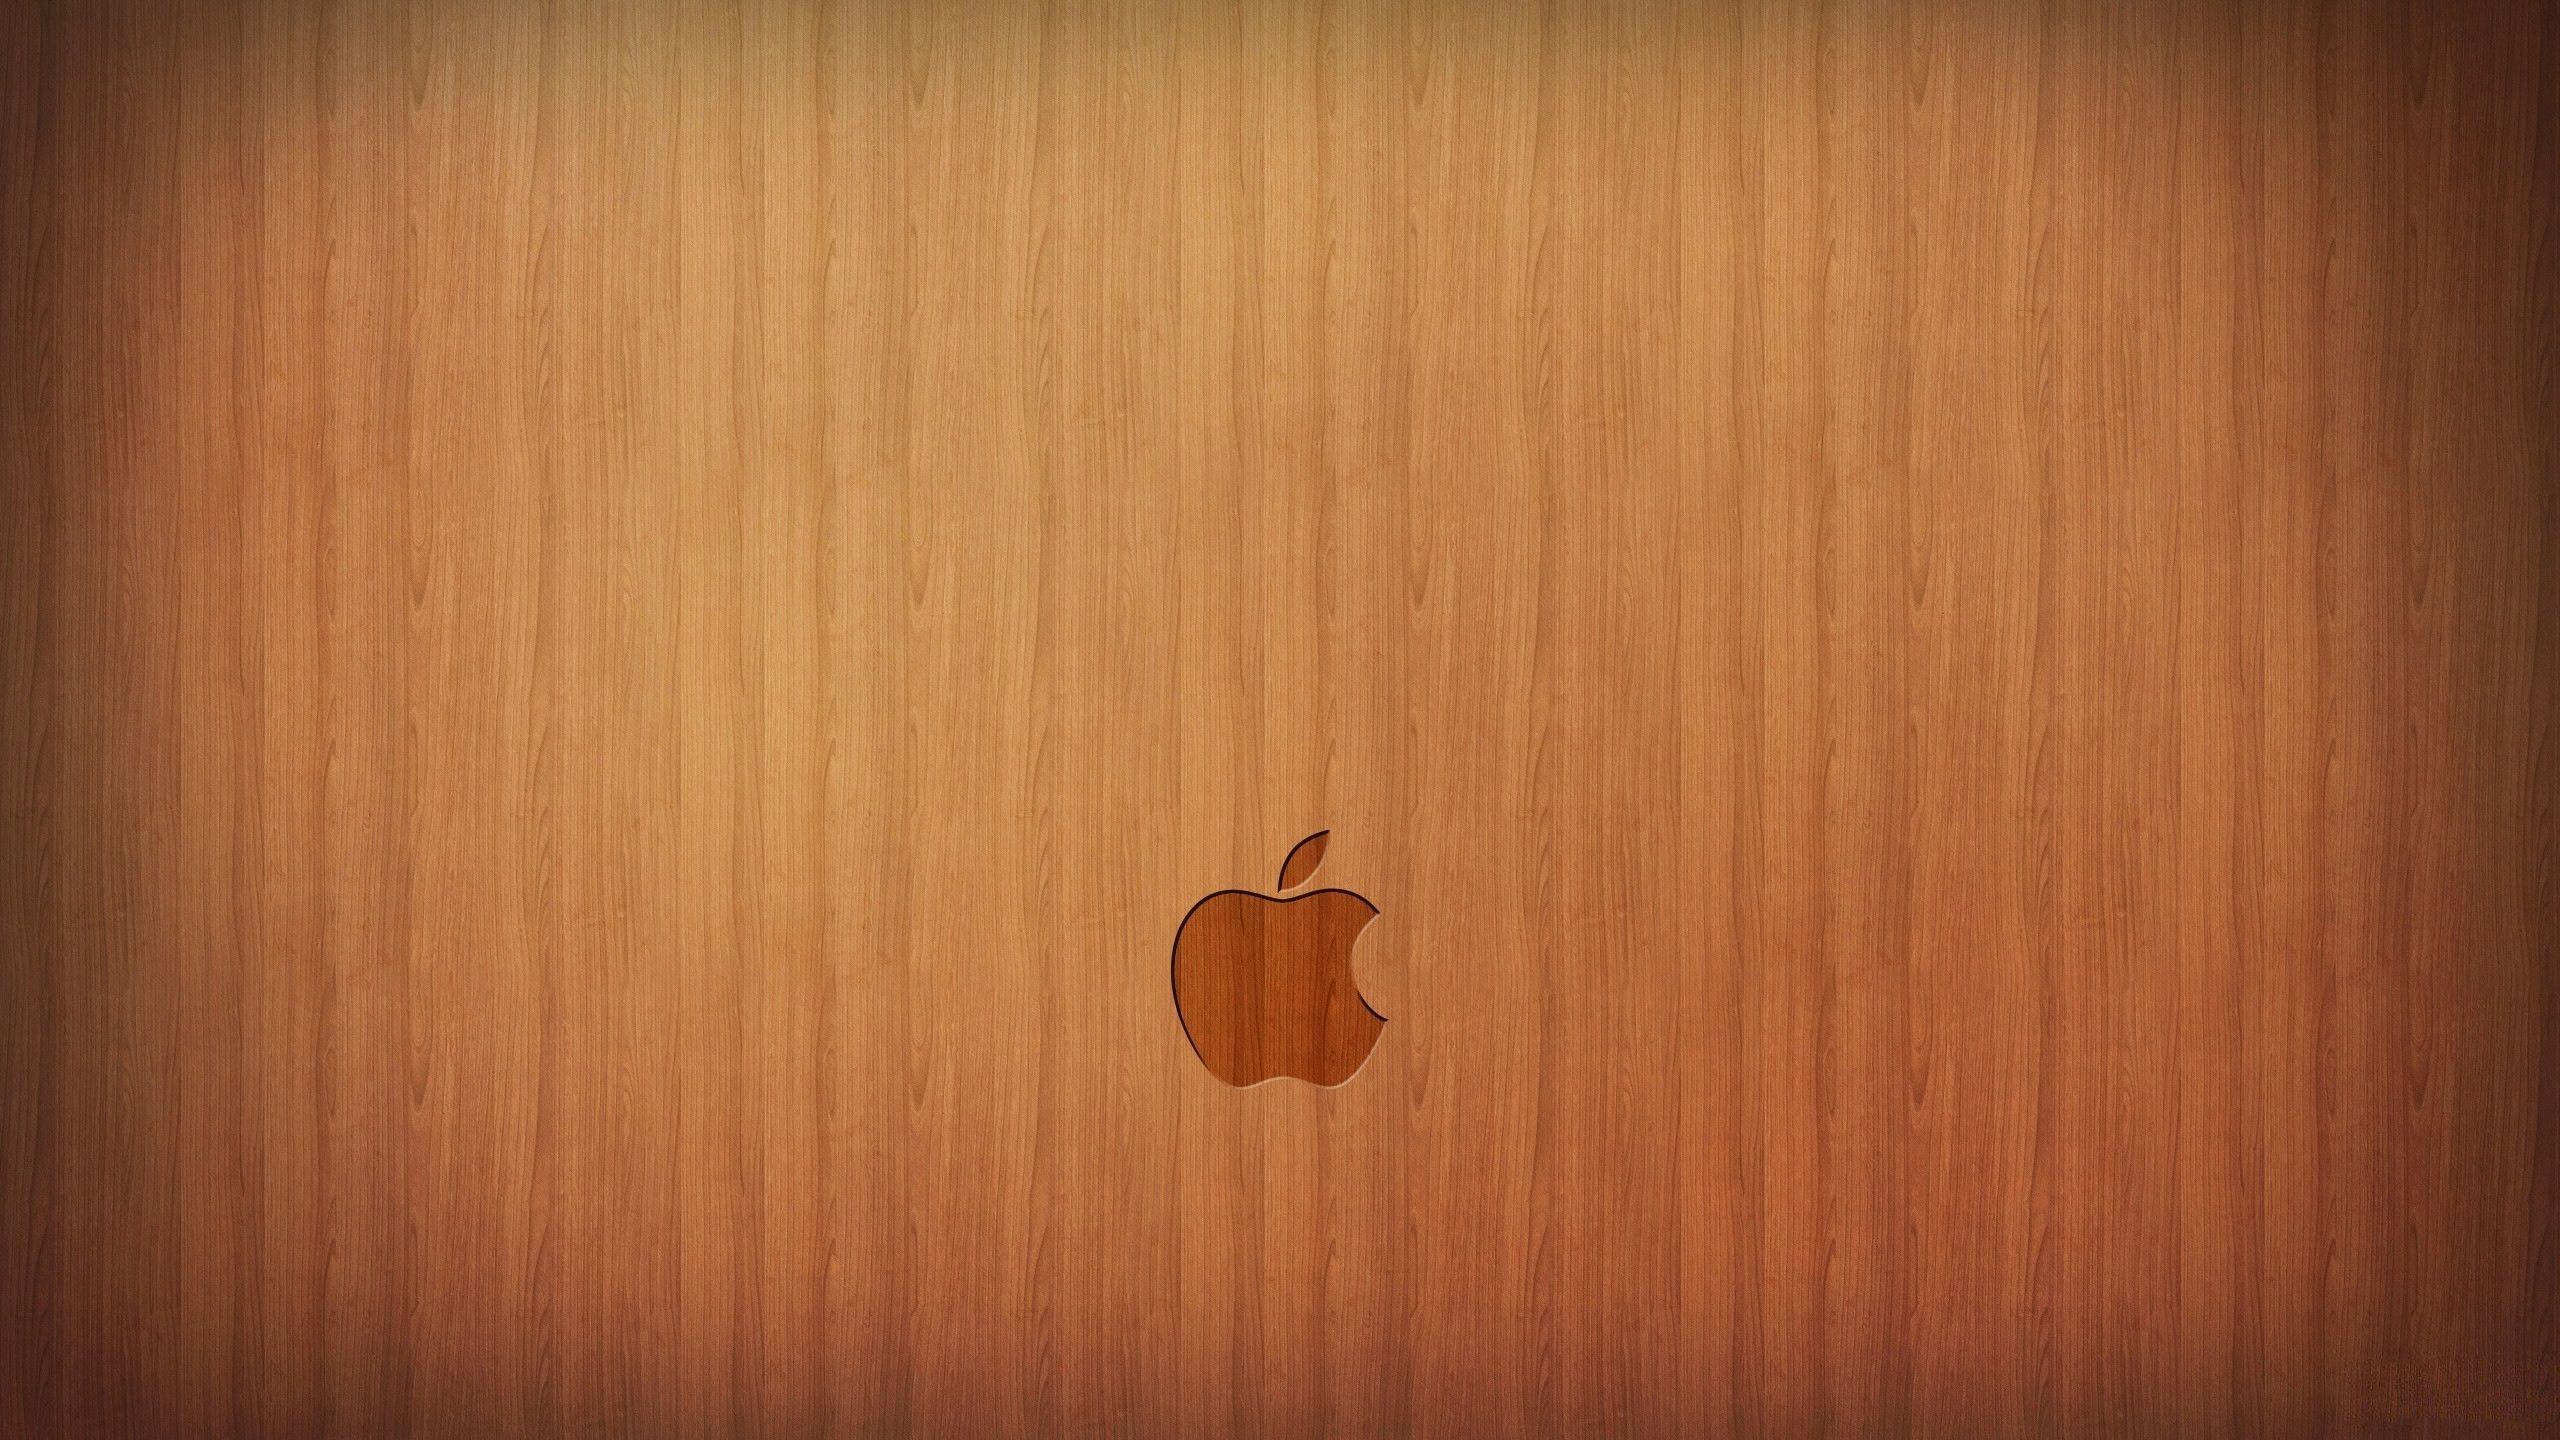 logo, Apple Inc. Wallpaper